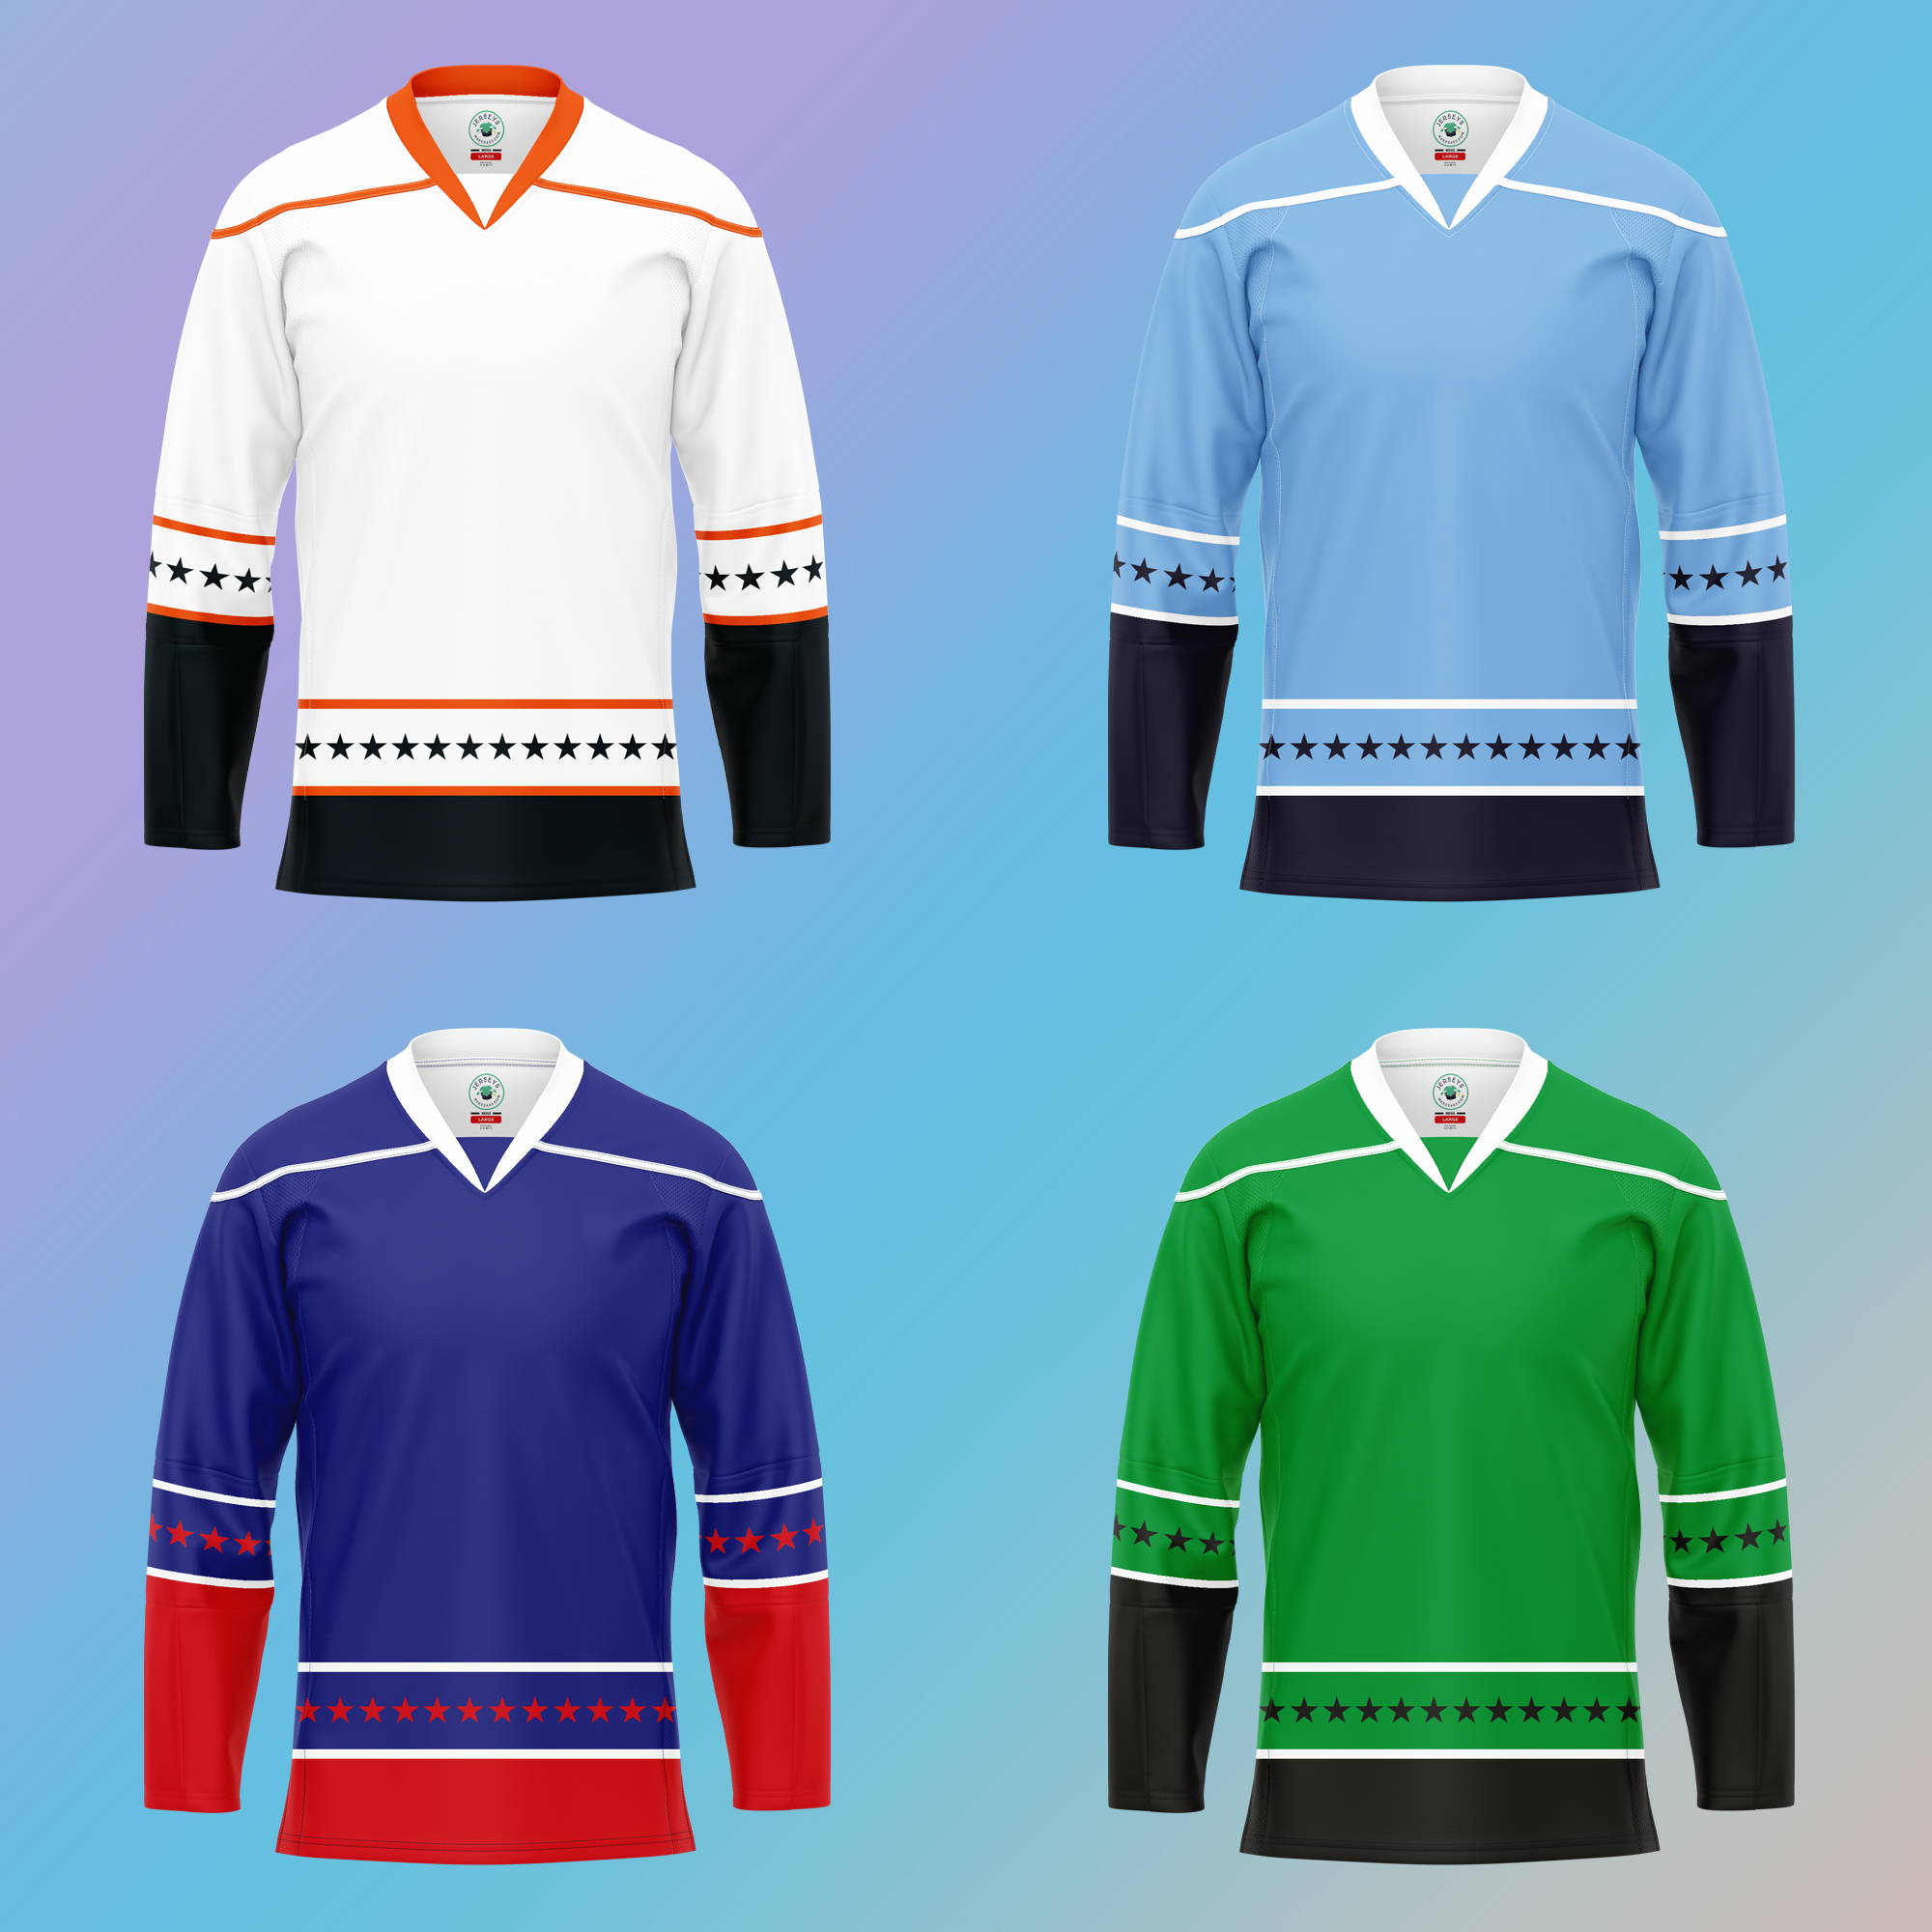 Hockey Uniform Design Template by Art Teach Doodle